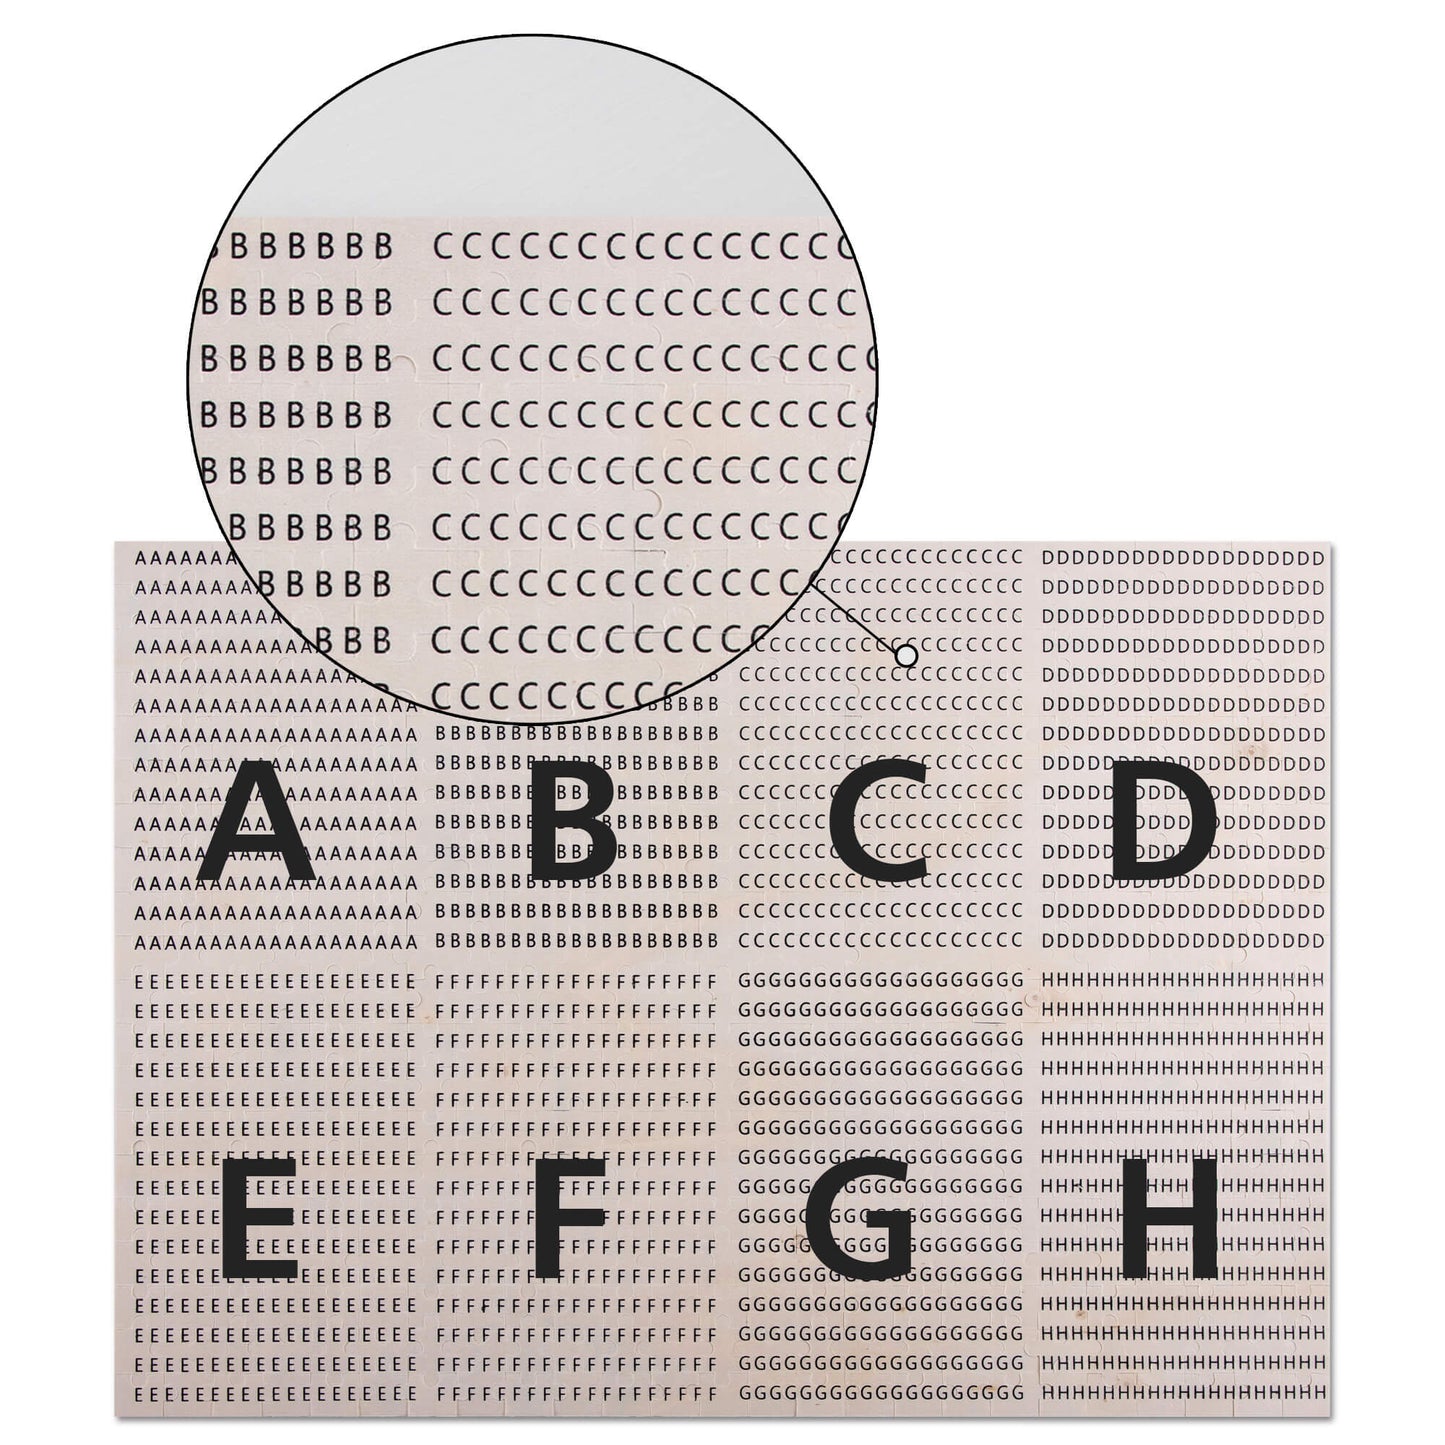 UNDERGROUND RAILROAD Puzzle Jigsaw (500 Pcs)